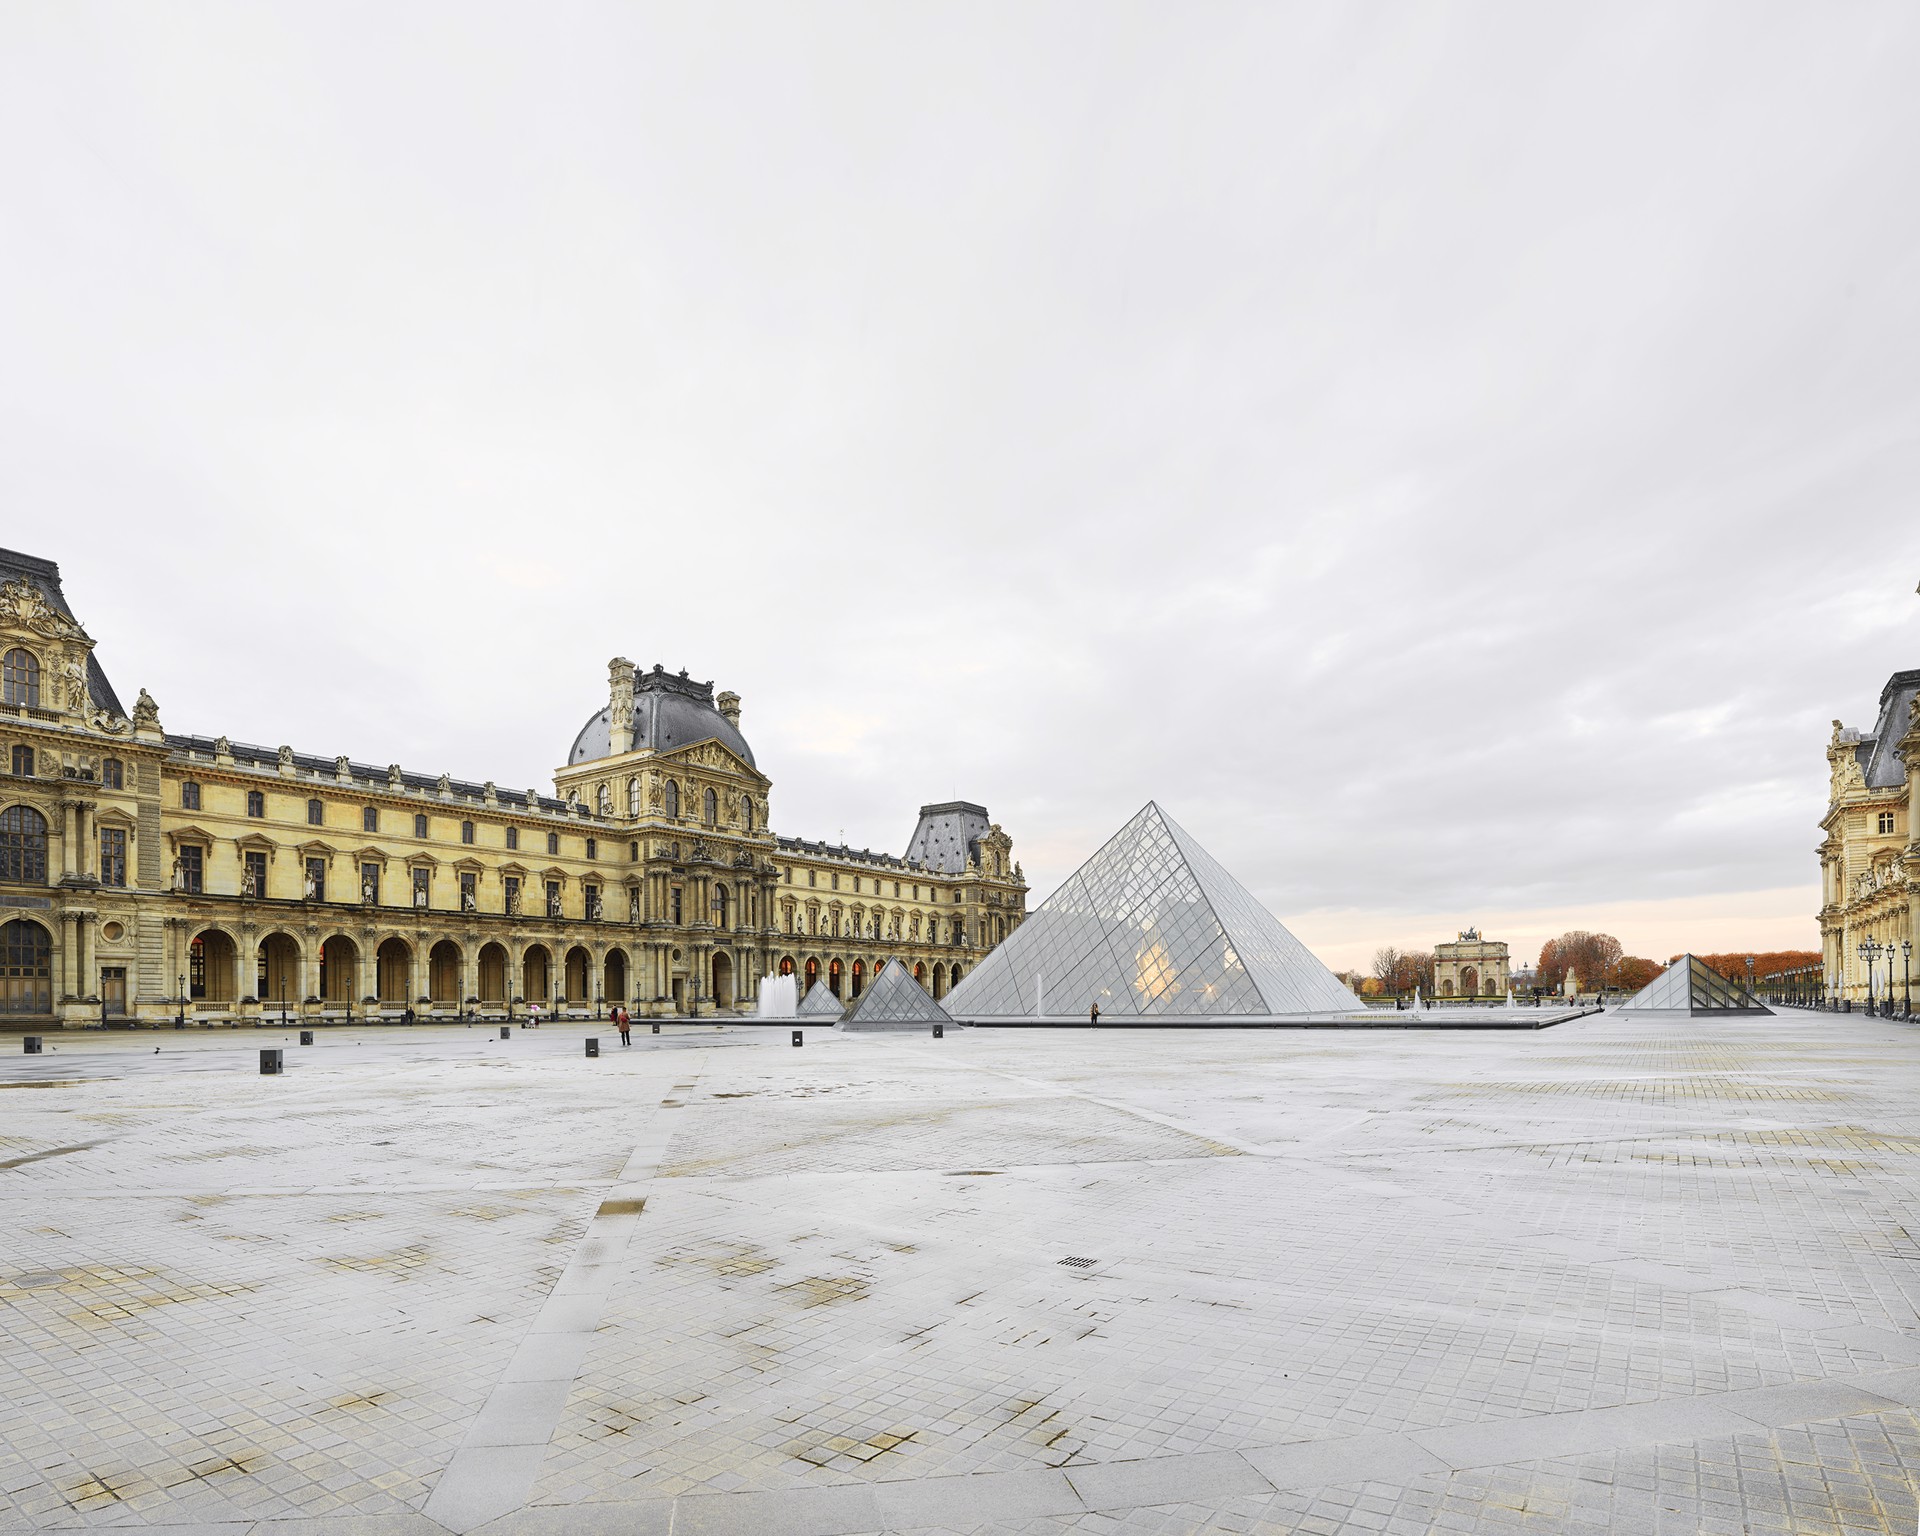 Parisian Pyramids, Louvre, Paris, FR by David Burdeny